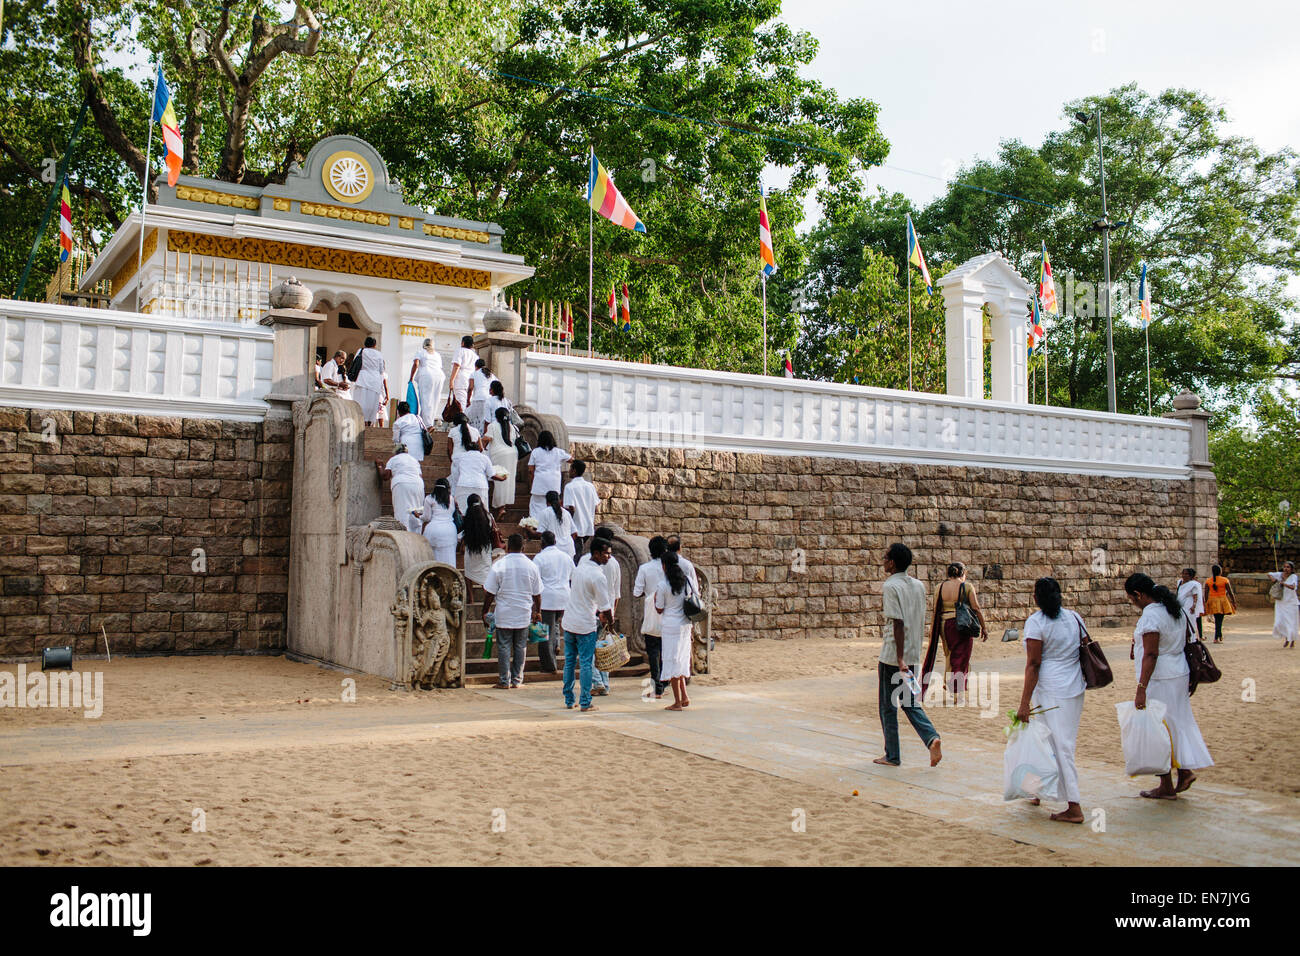 Sri Maha Bodhi, a major Buddhist religious site, in Anuradhapura, Sri Lanka. Stock Photo